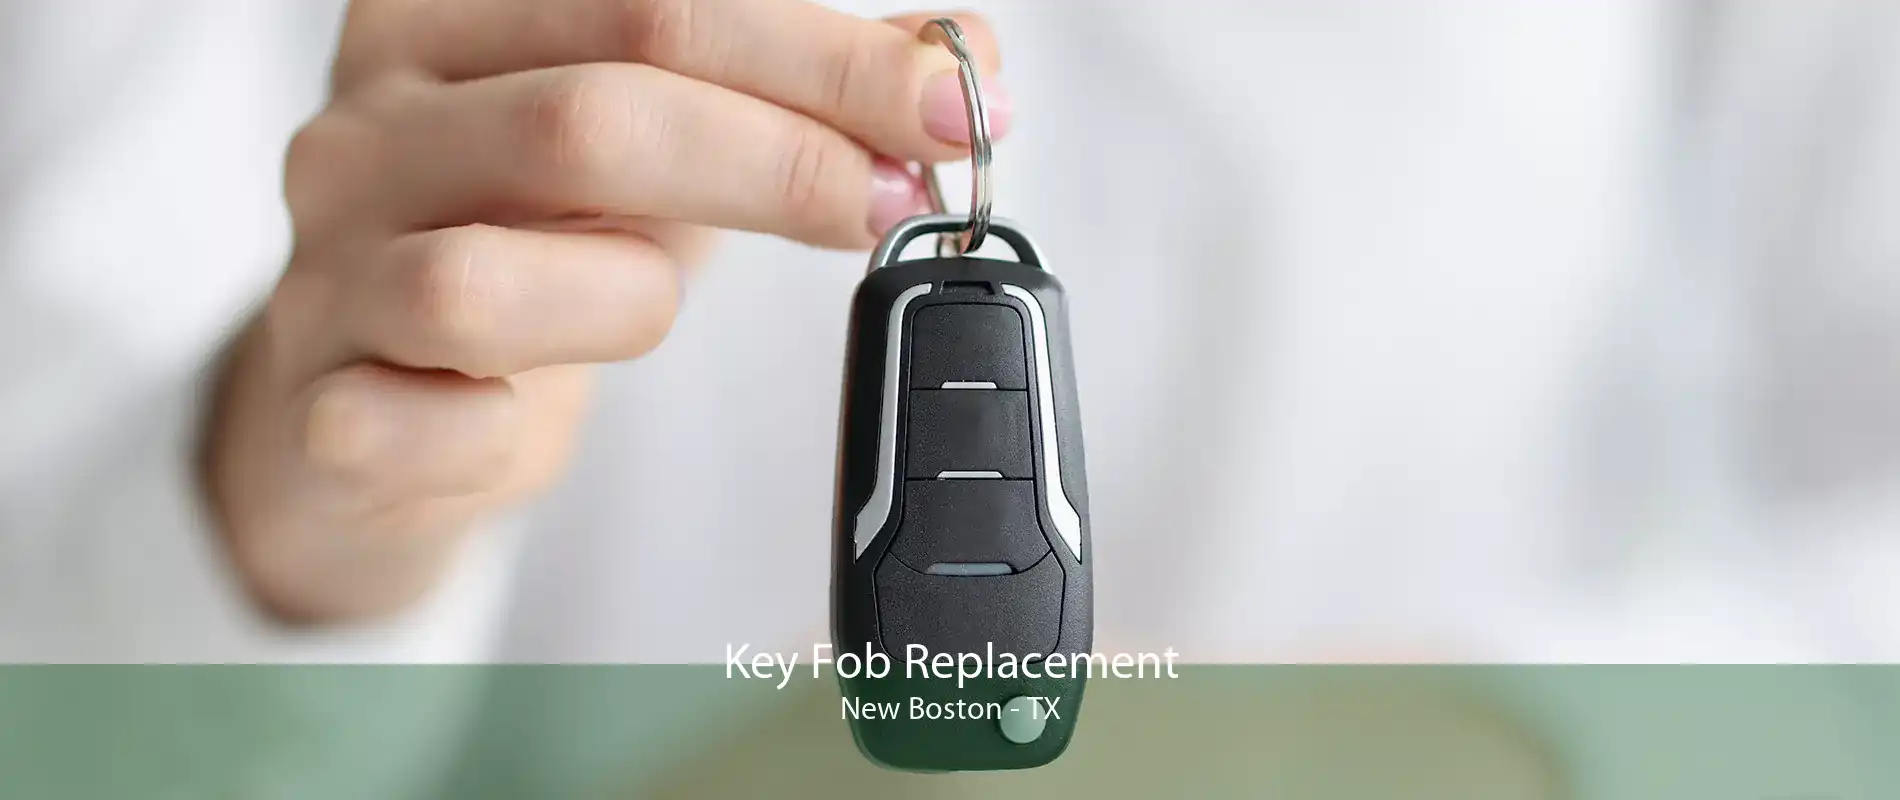 Key Fob Replacement New Boston - TX